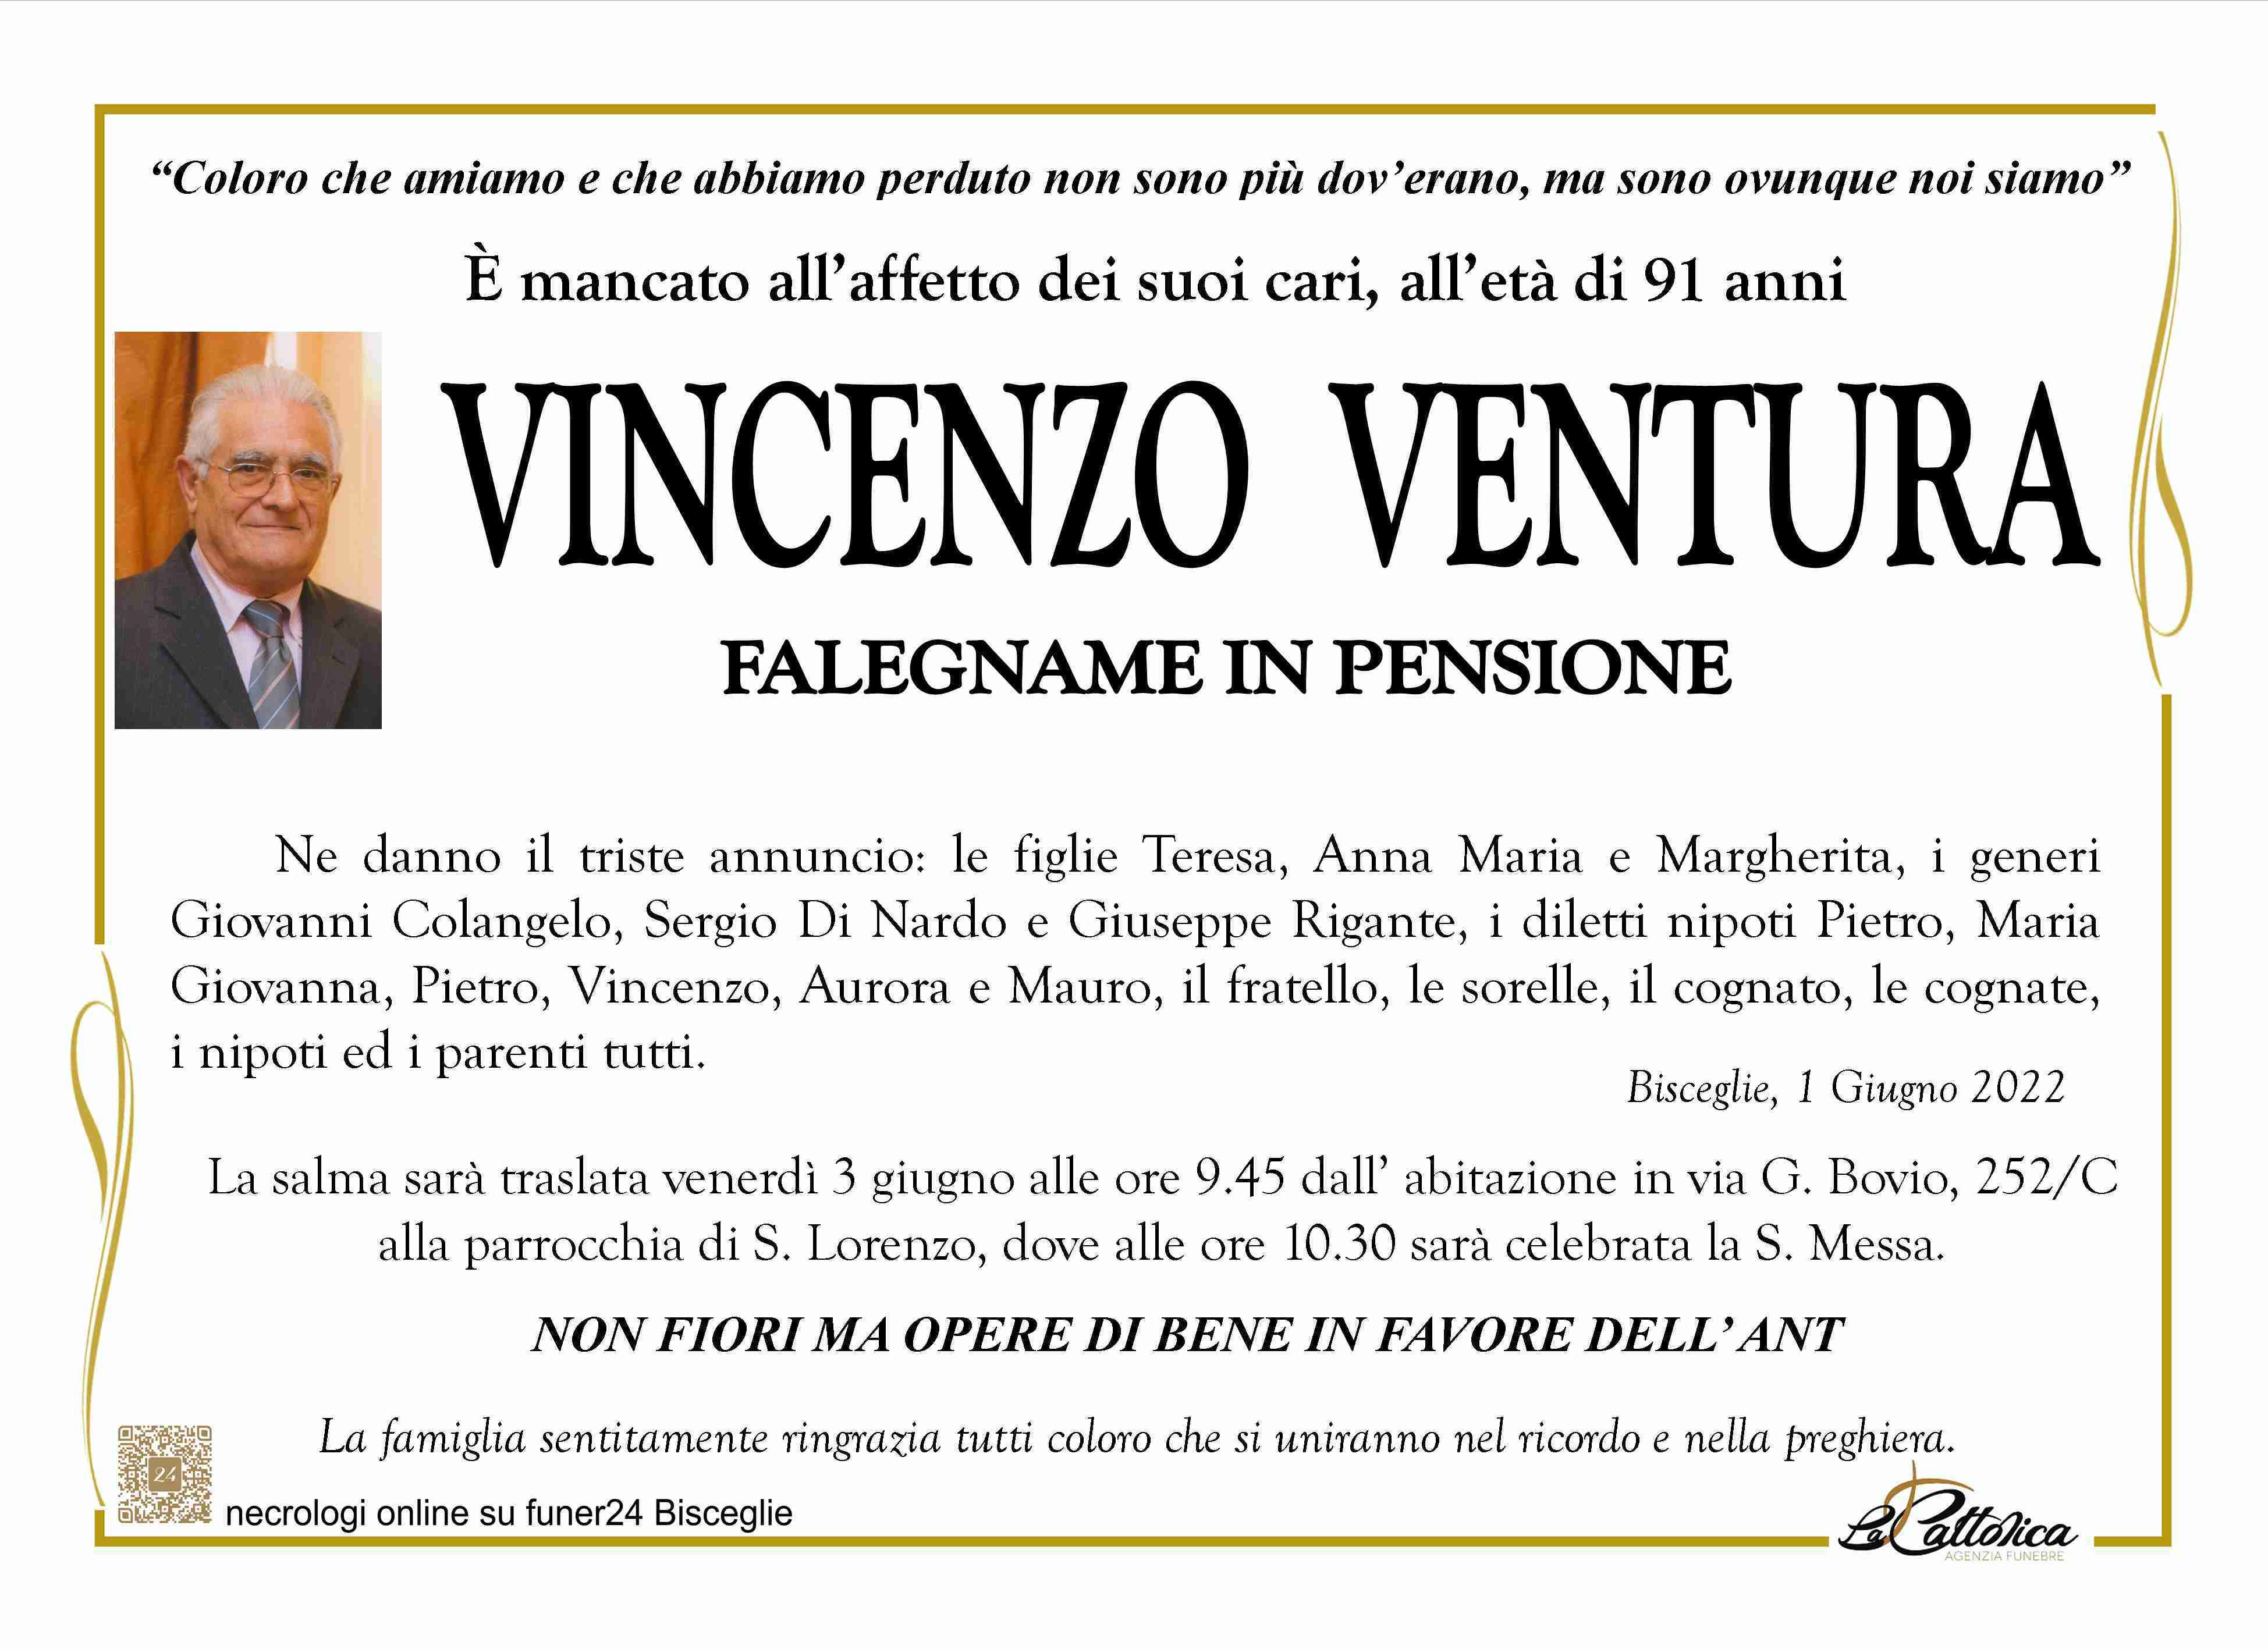 Vincenzo Ventura